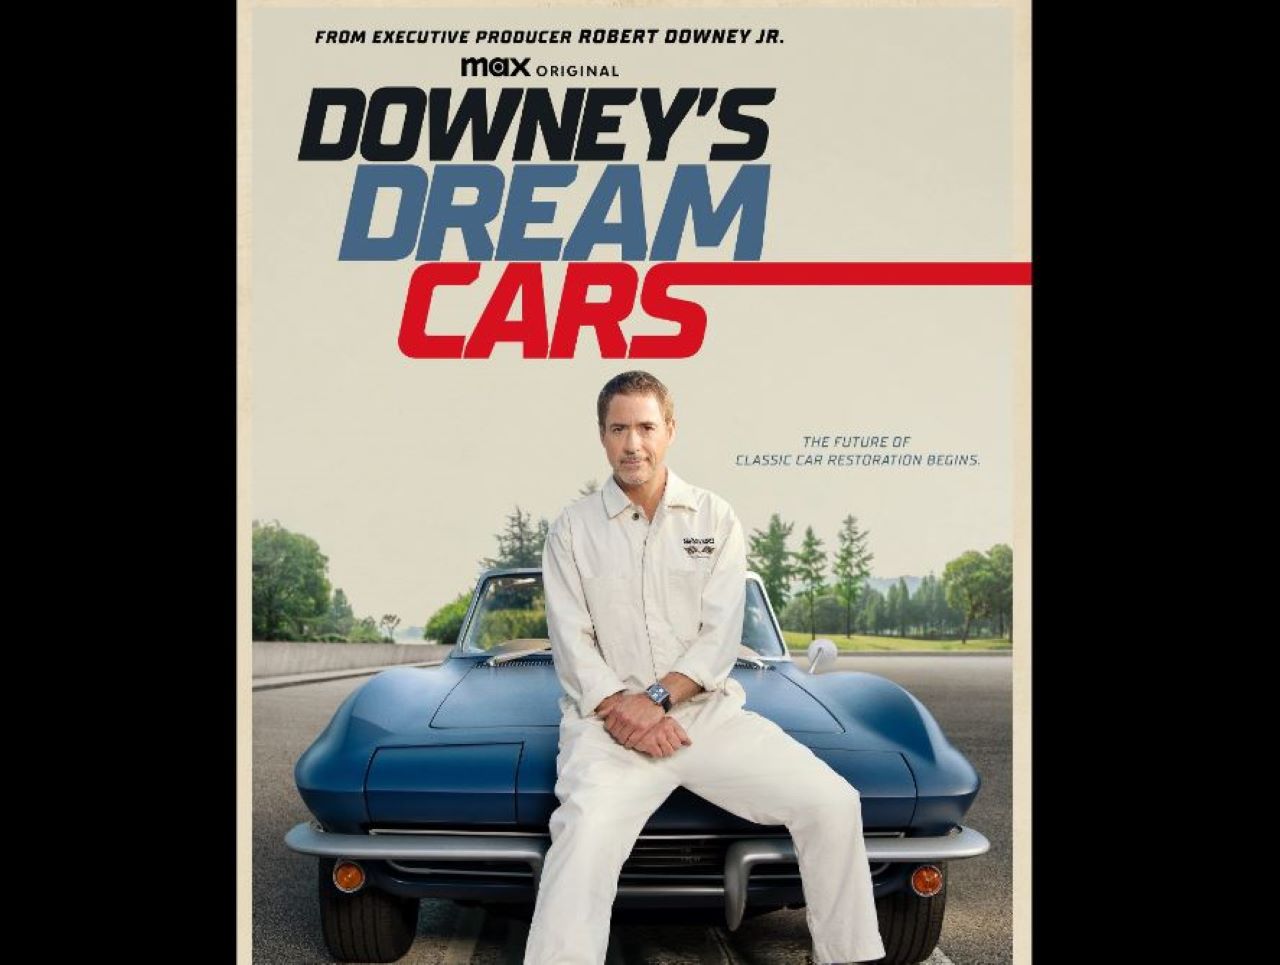 Downeys dream cars